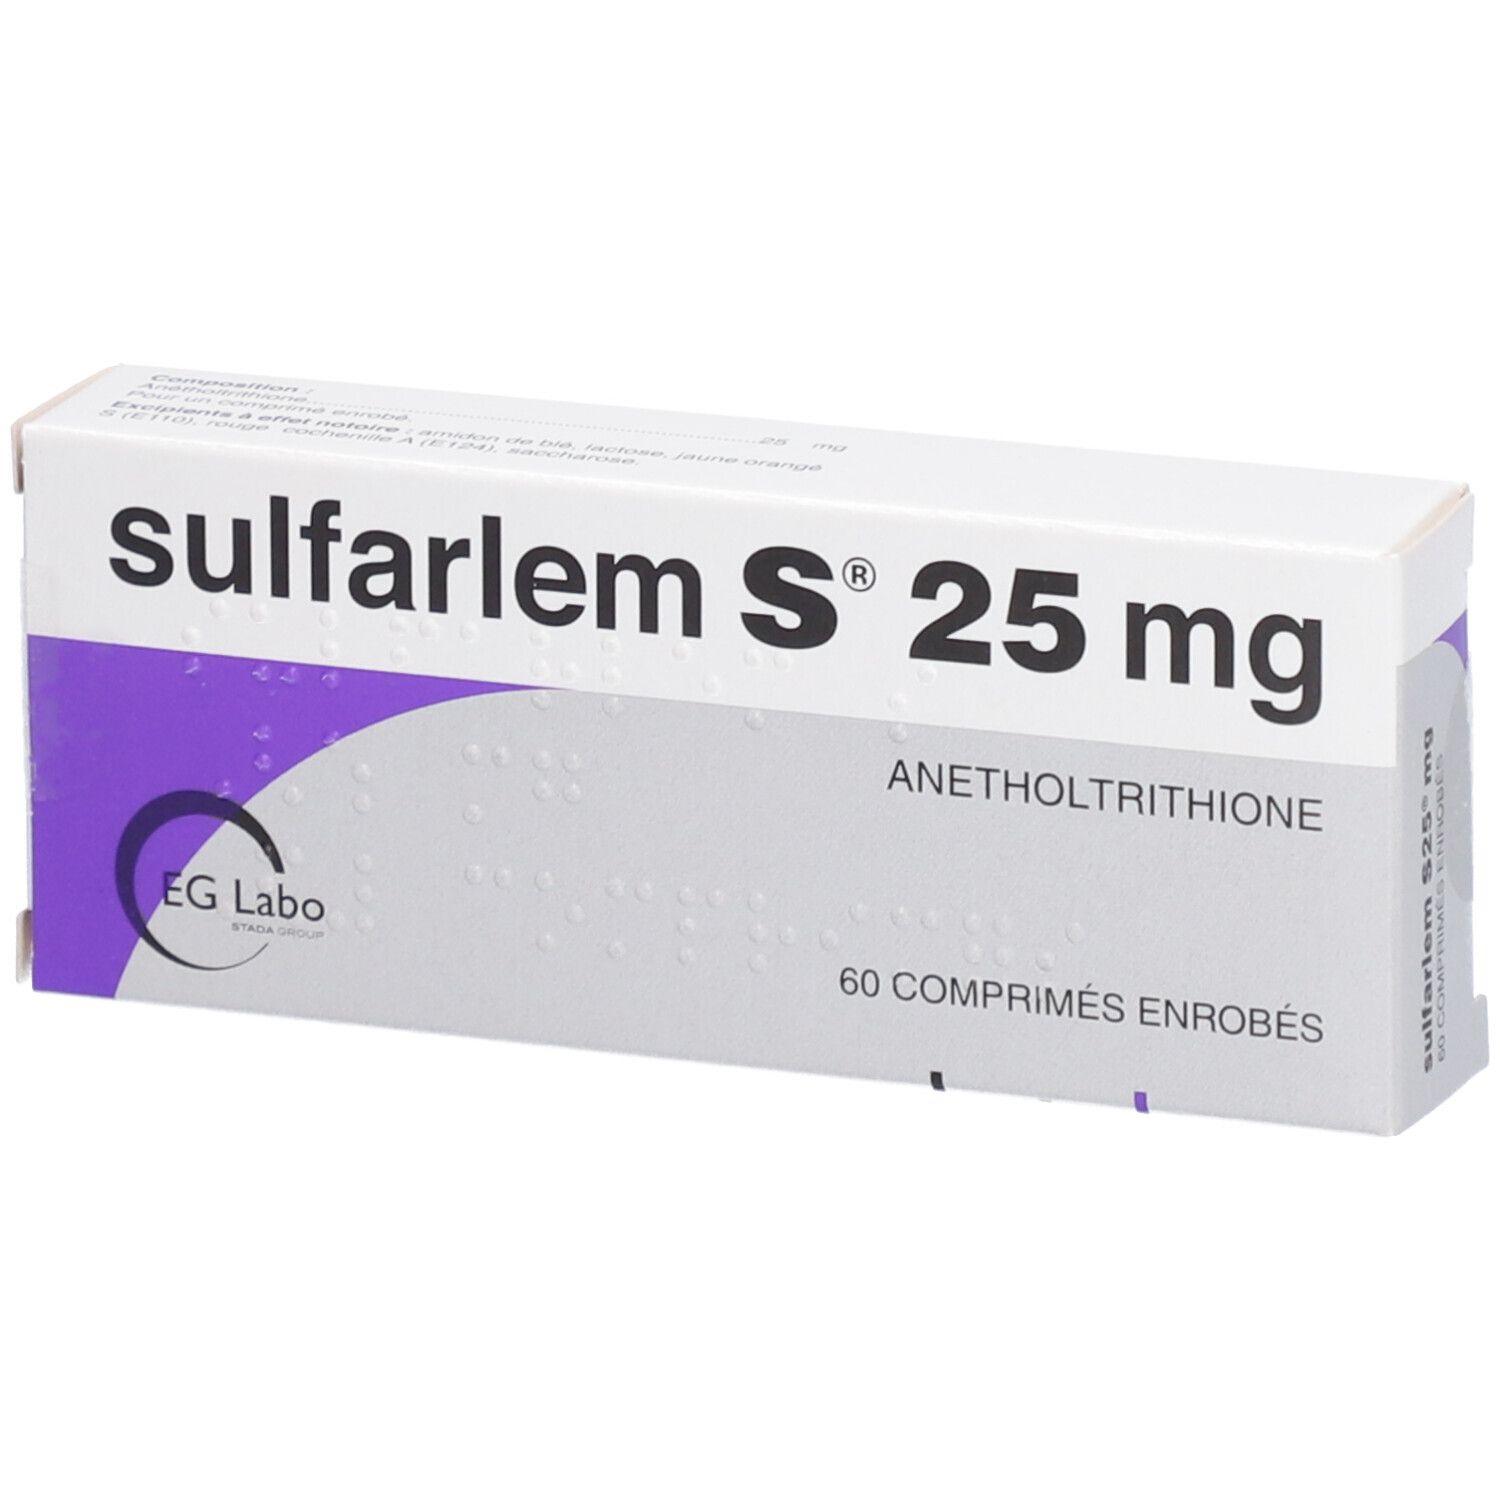 sulfarlem S25® mg